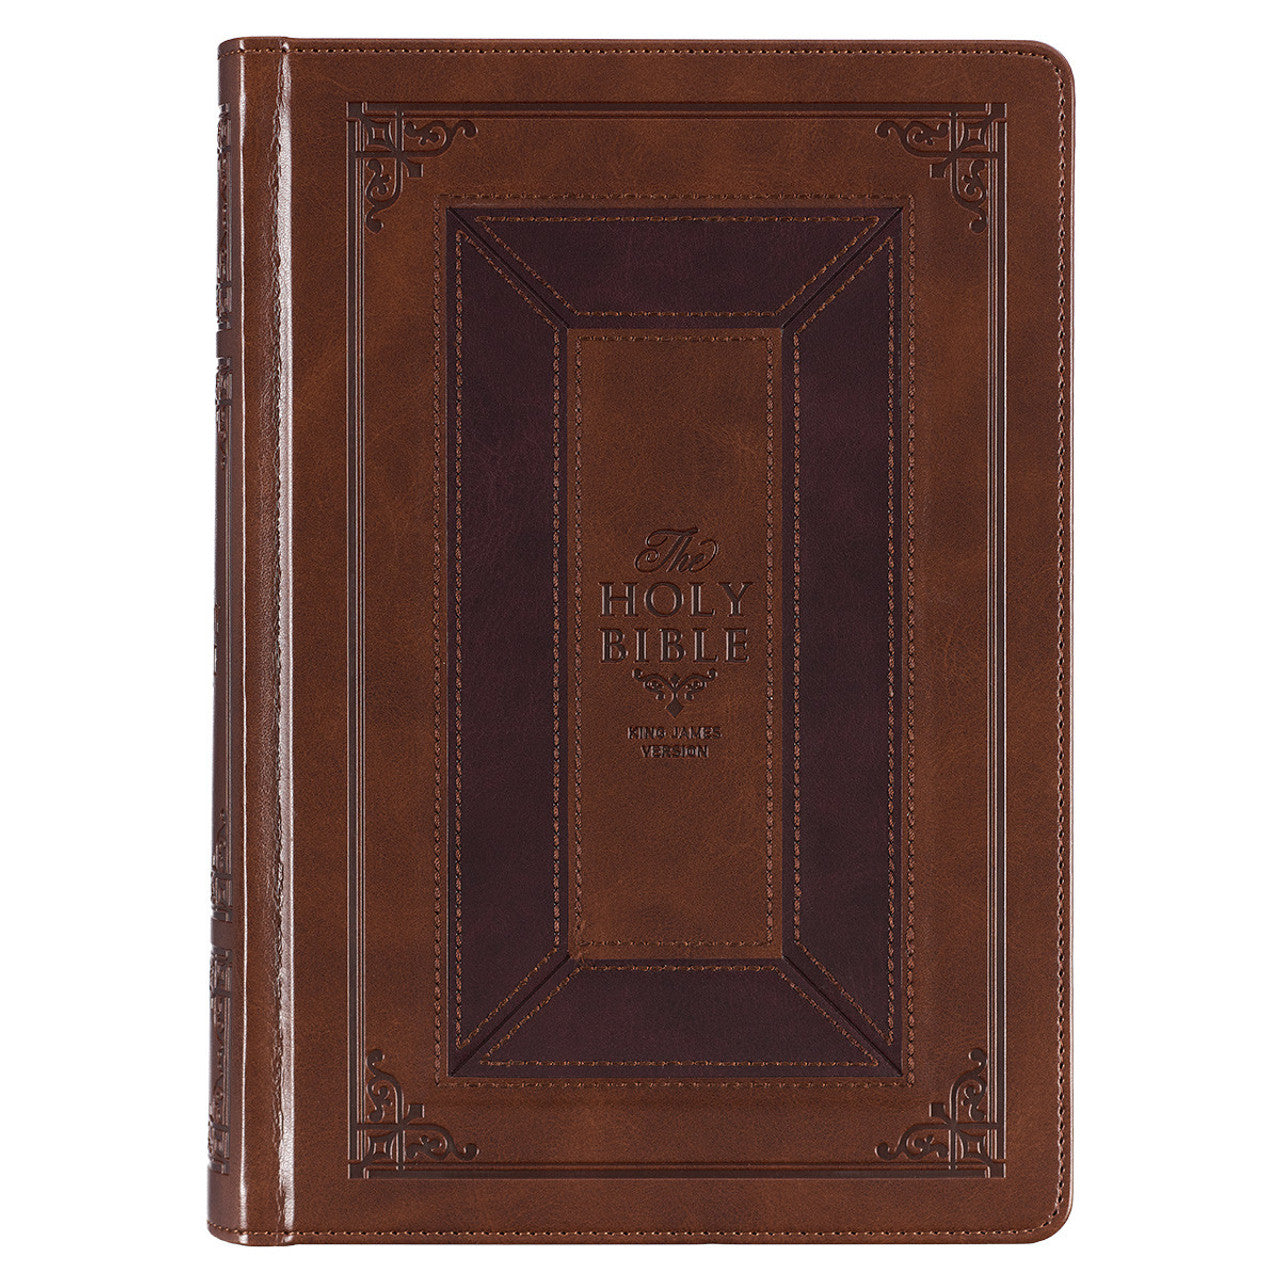 The Reformation Heritage KJV Study Bible by Christian Art Publishers